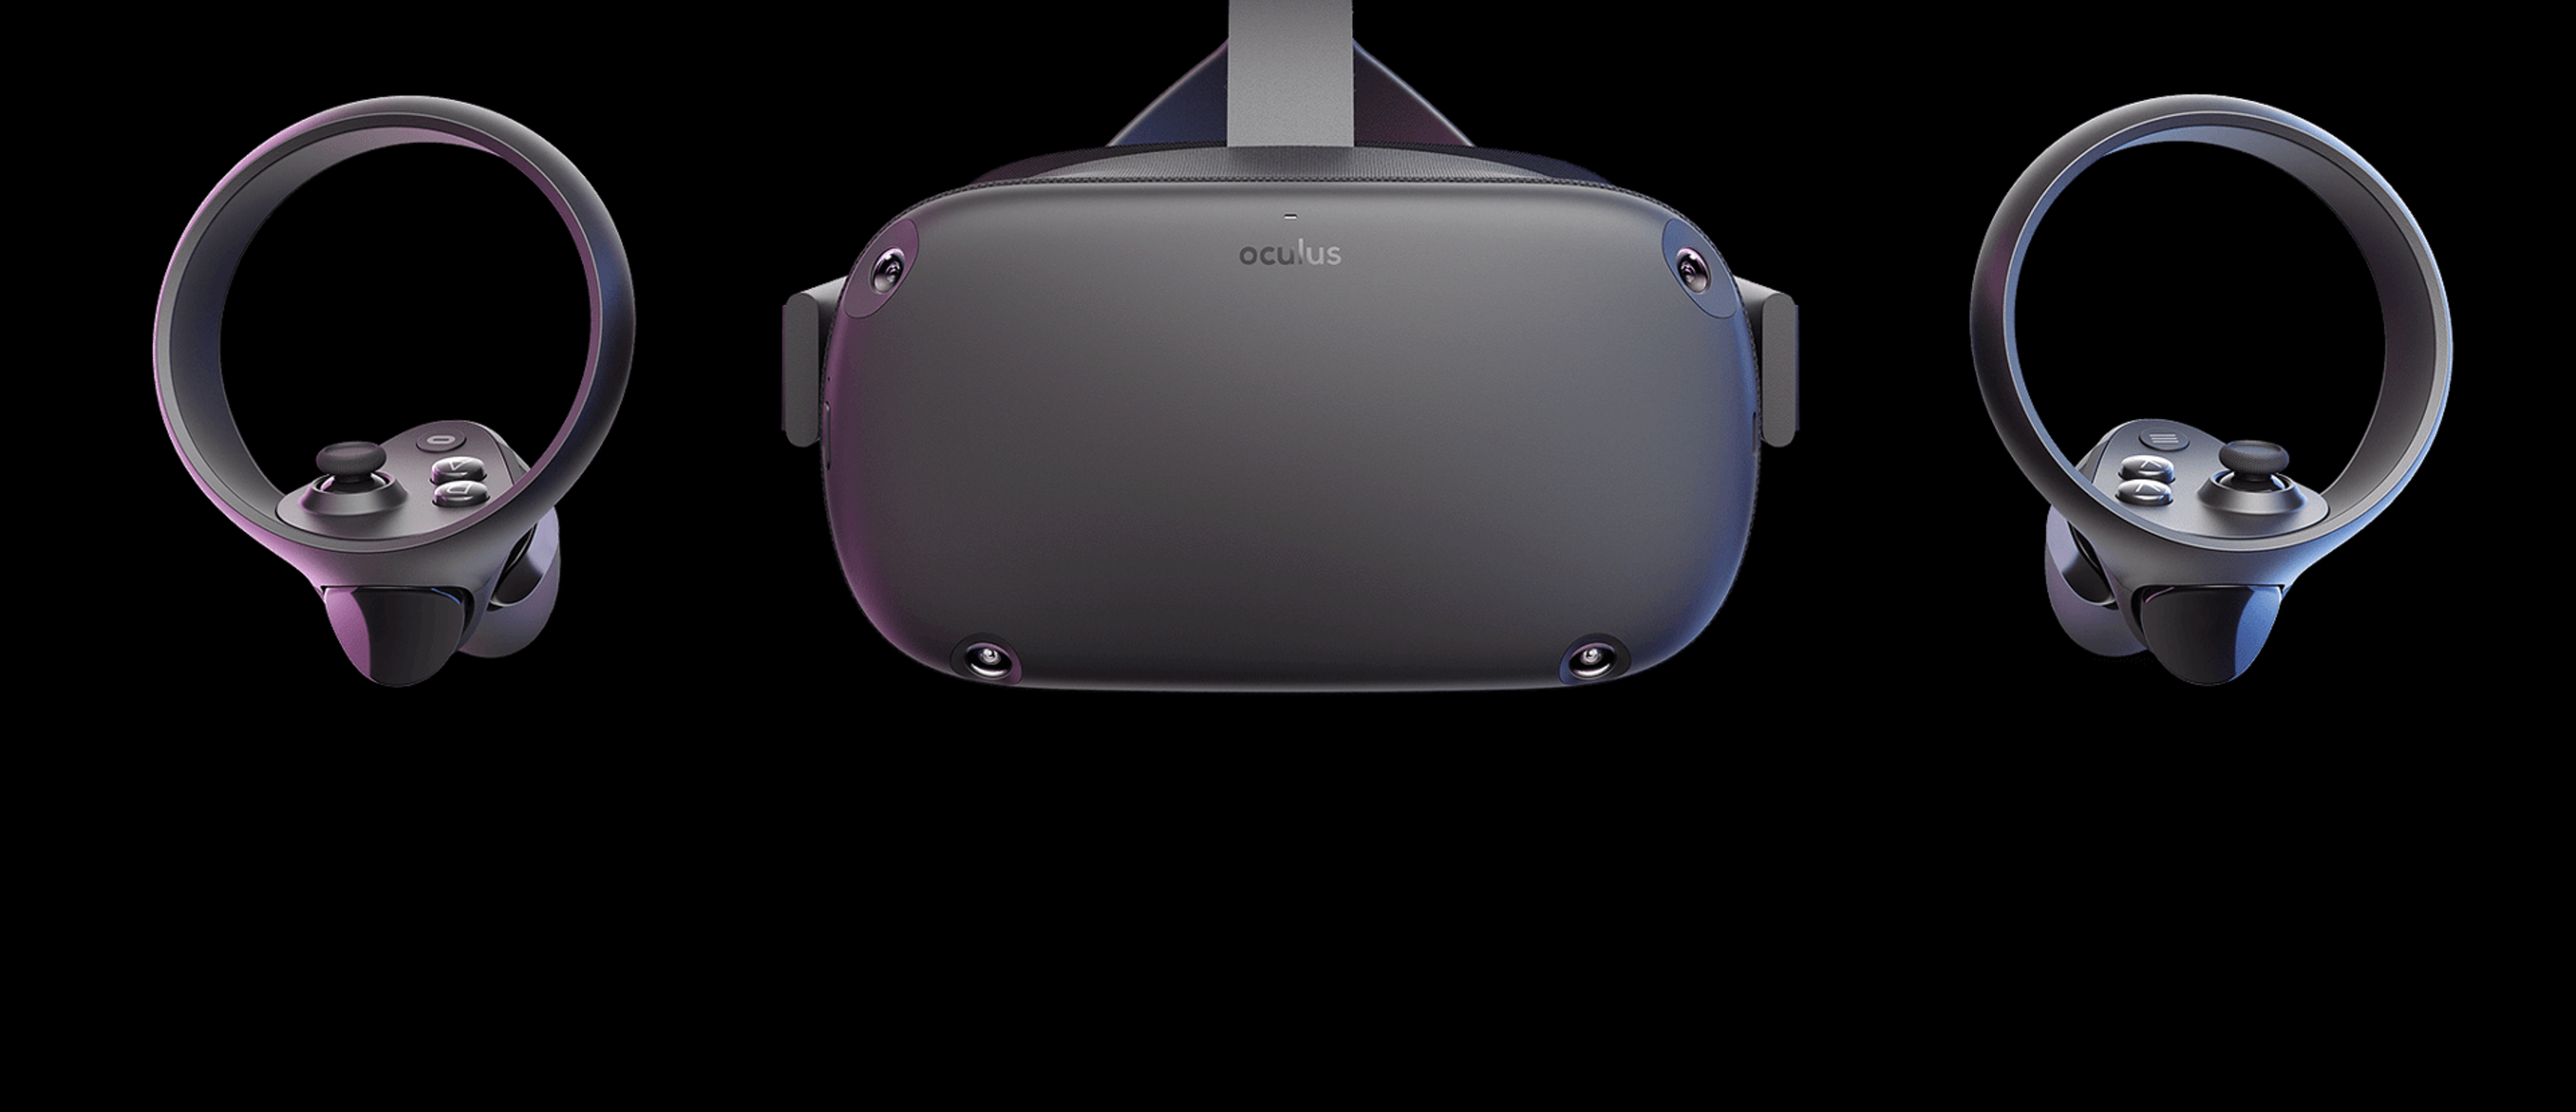 Гарнитура quest 2. VR очки Oculus Quest. ВР очки Oculus 2. Oculus Quest 2 разъемы. VR шлем Oculus Quest 2.